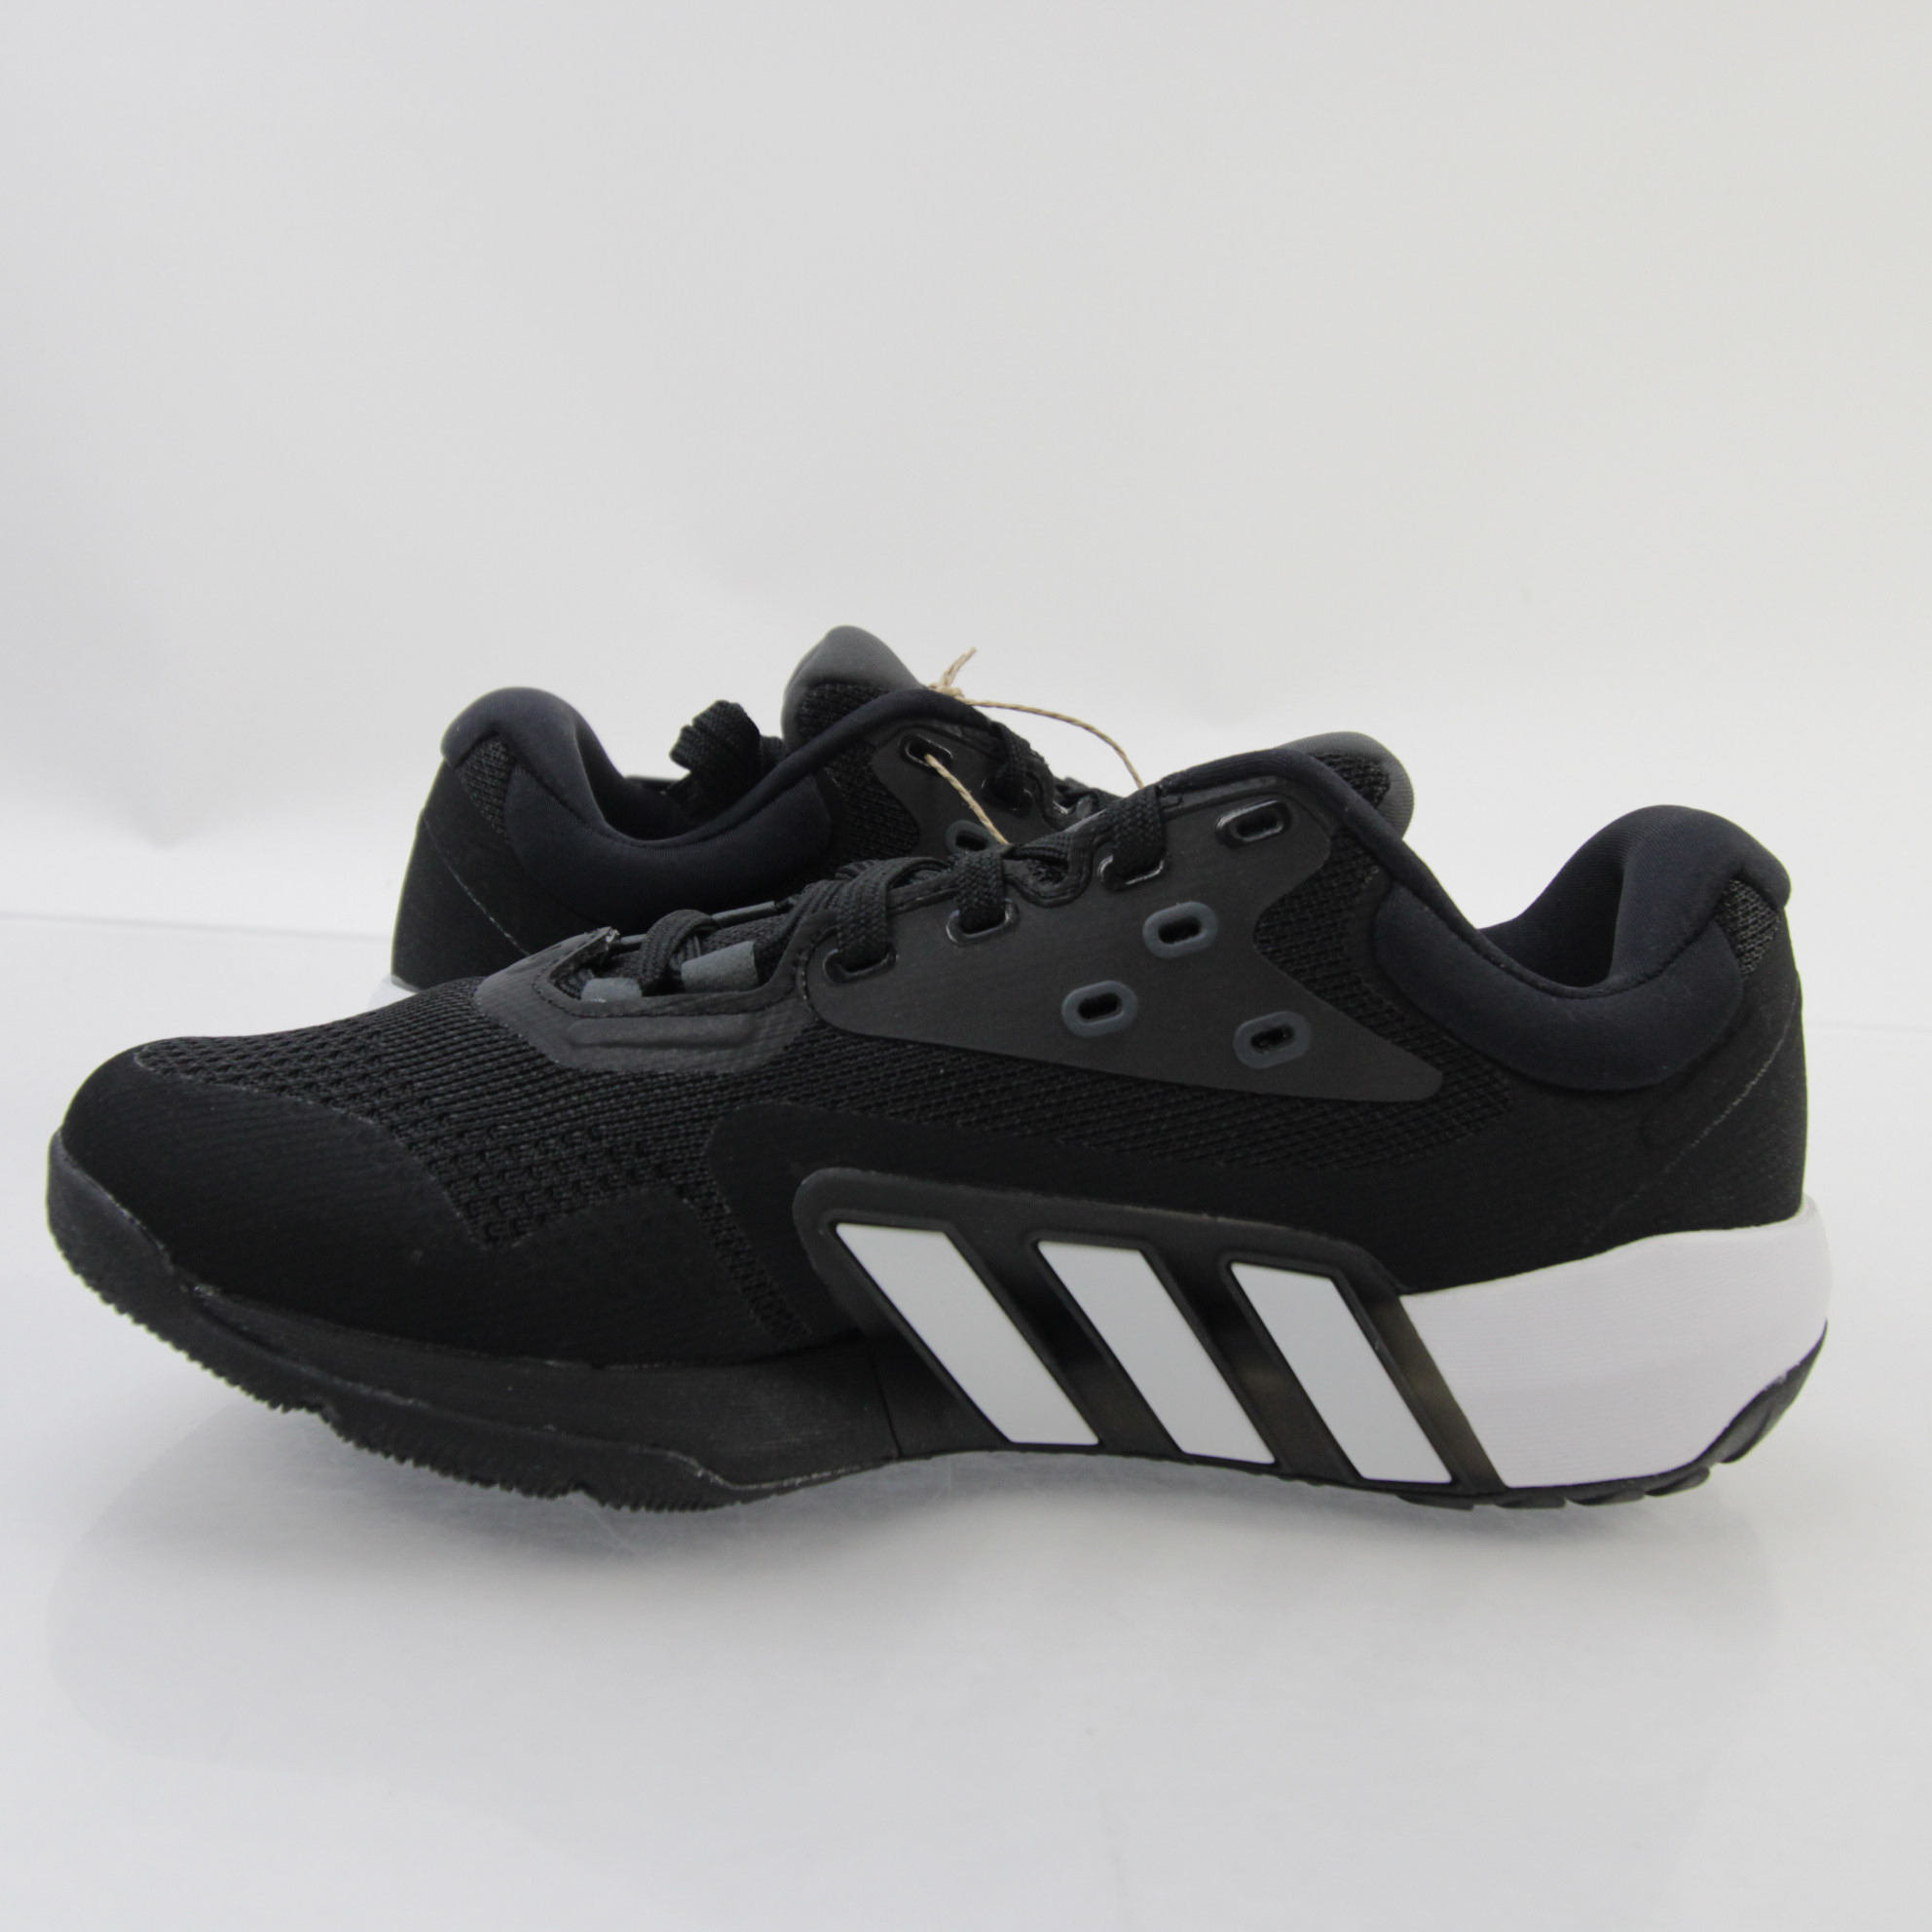 adidas Cross Training Shoes Men's Black/White New without Box | eBay